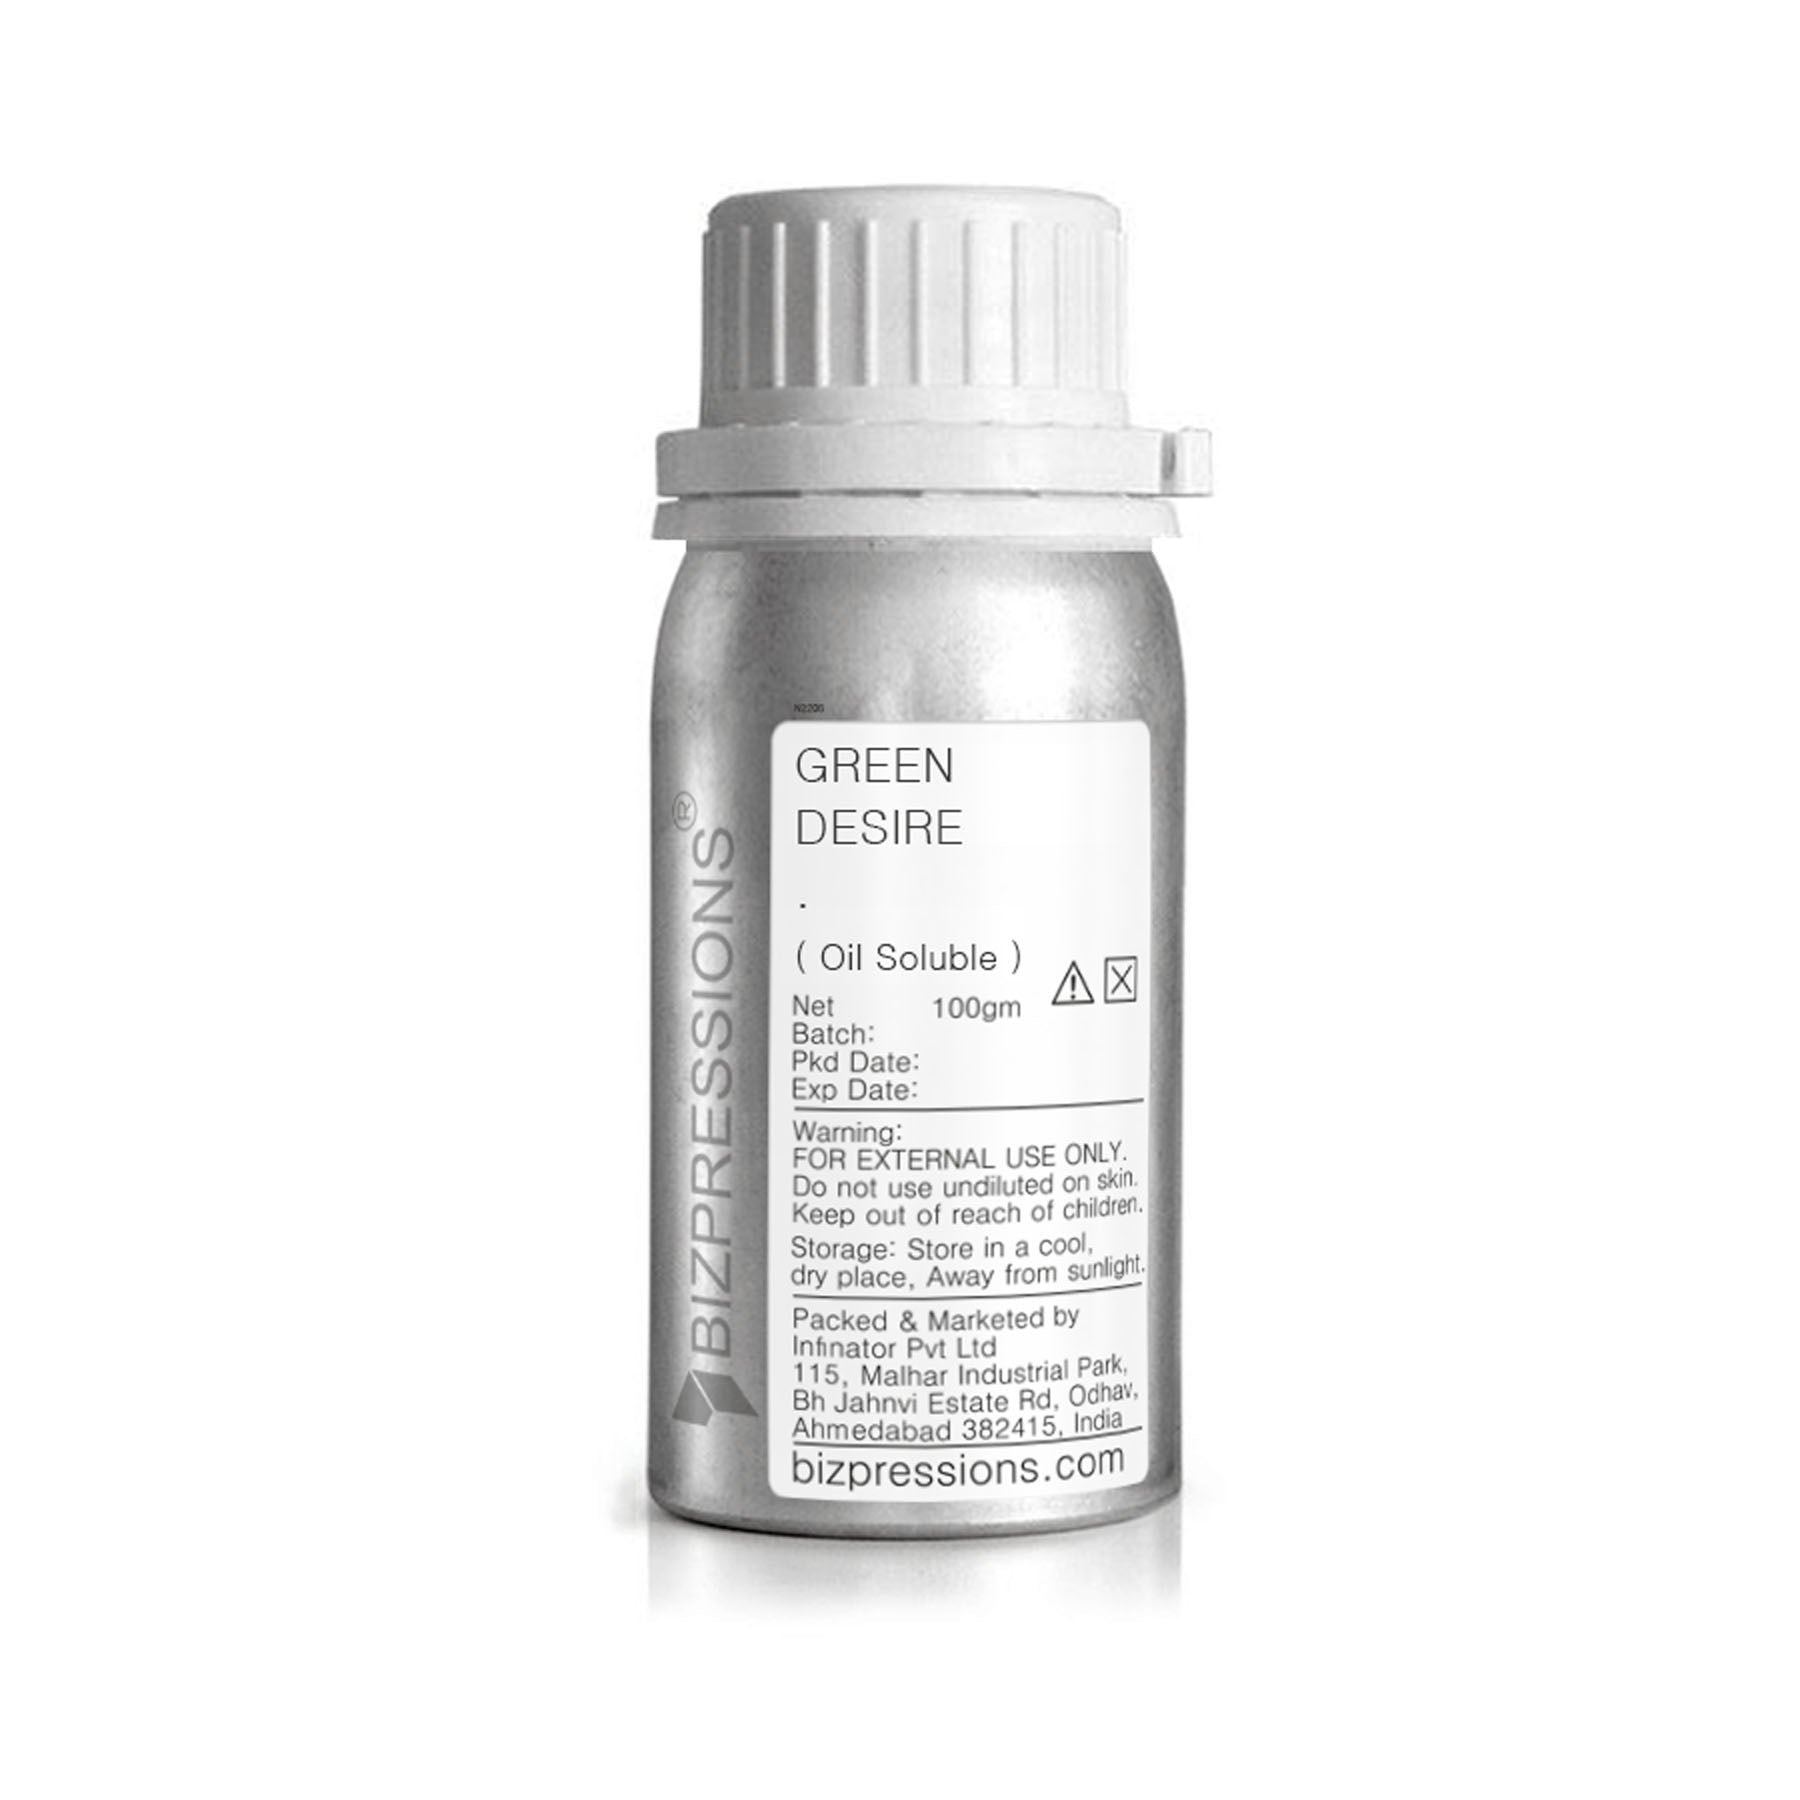 GREEN DESIRE - Fragrance ( Oil Soluble ) - 100 gm